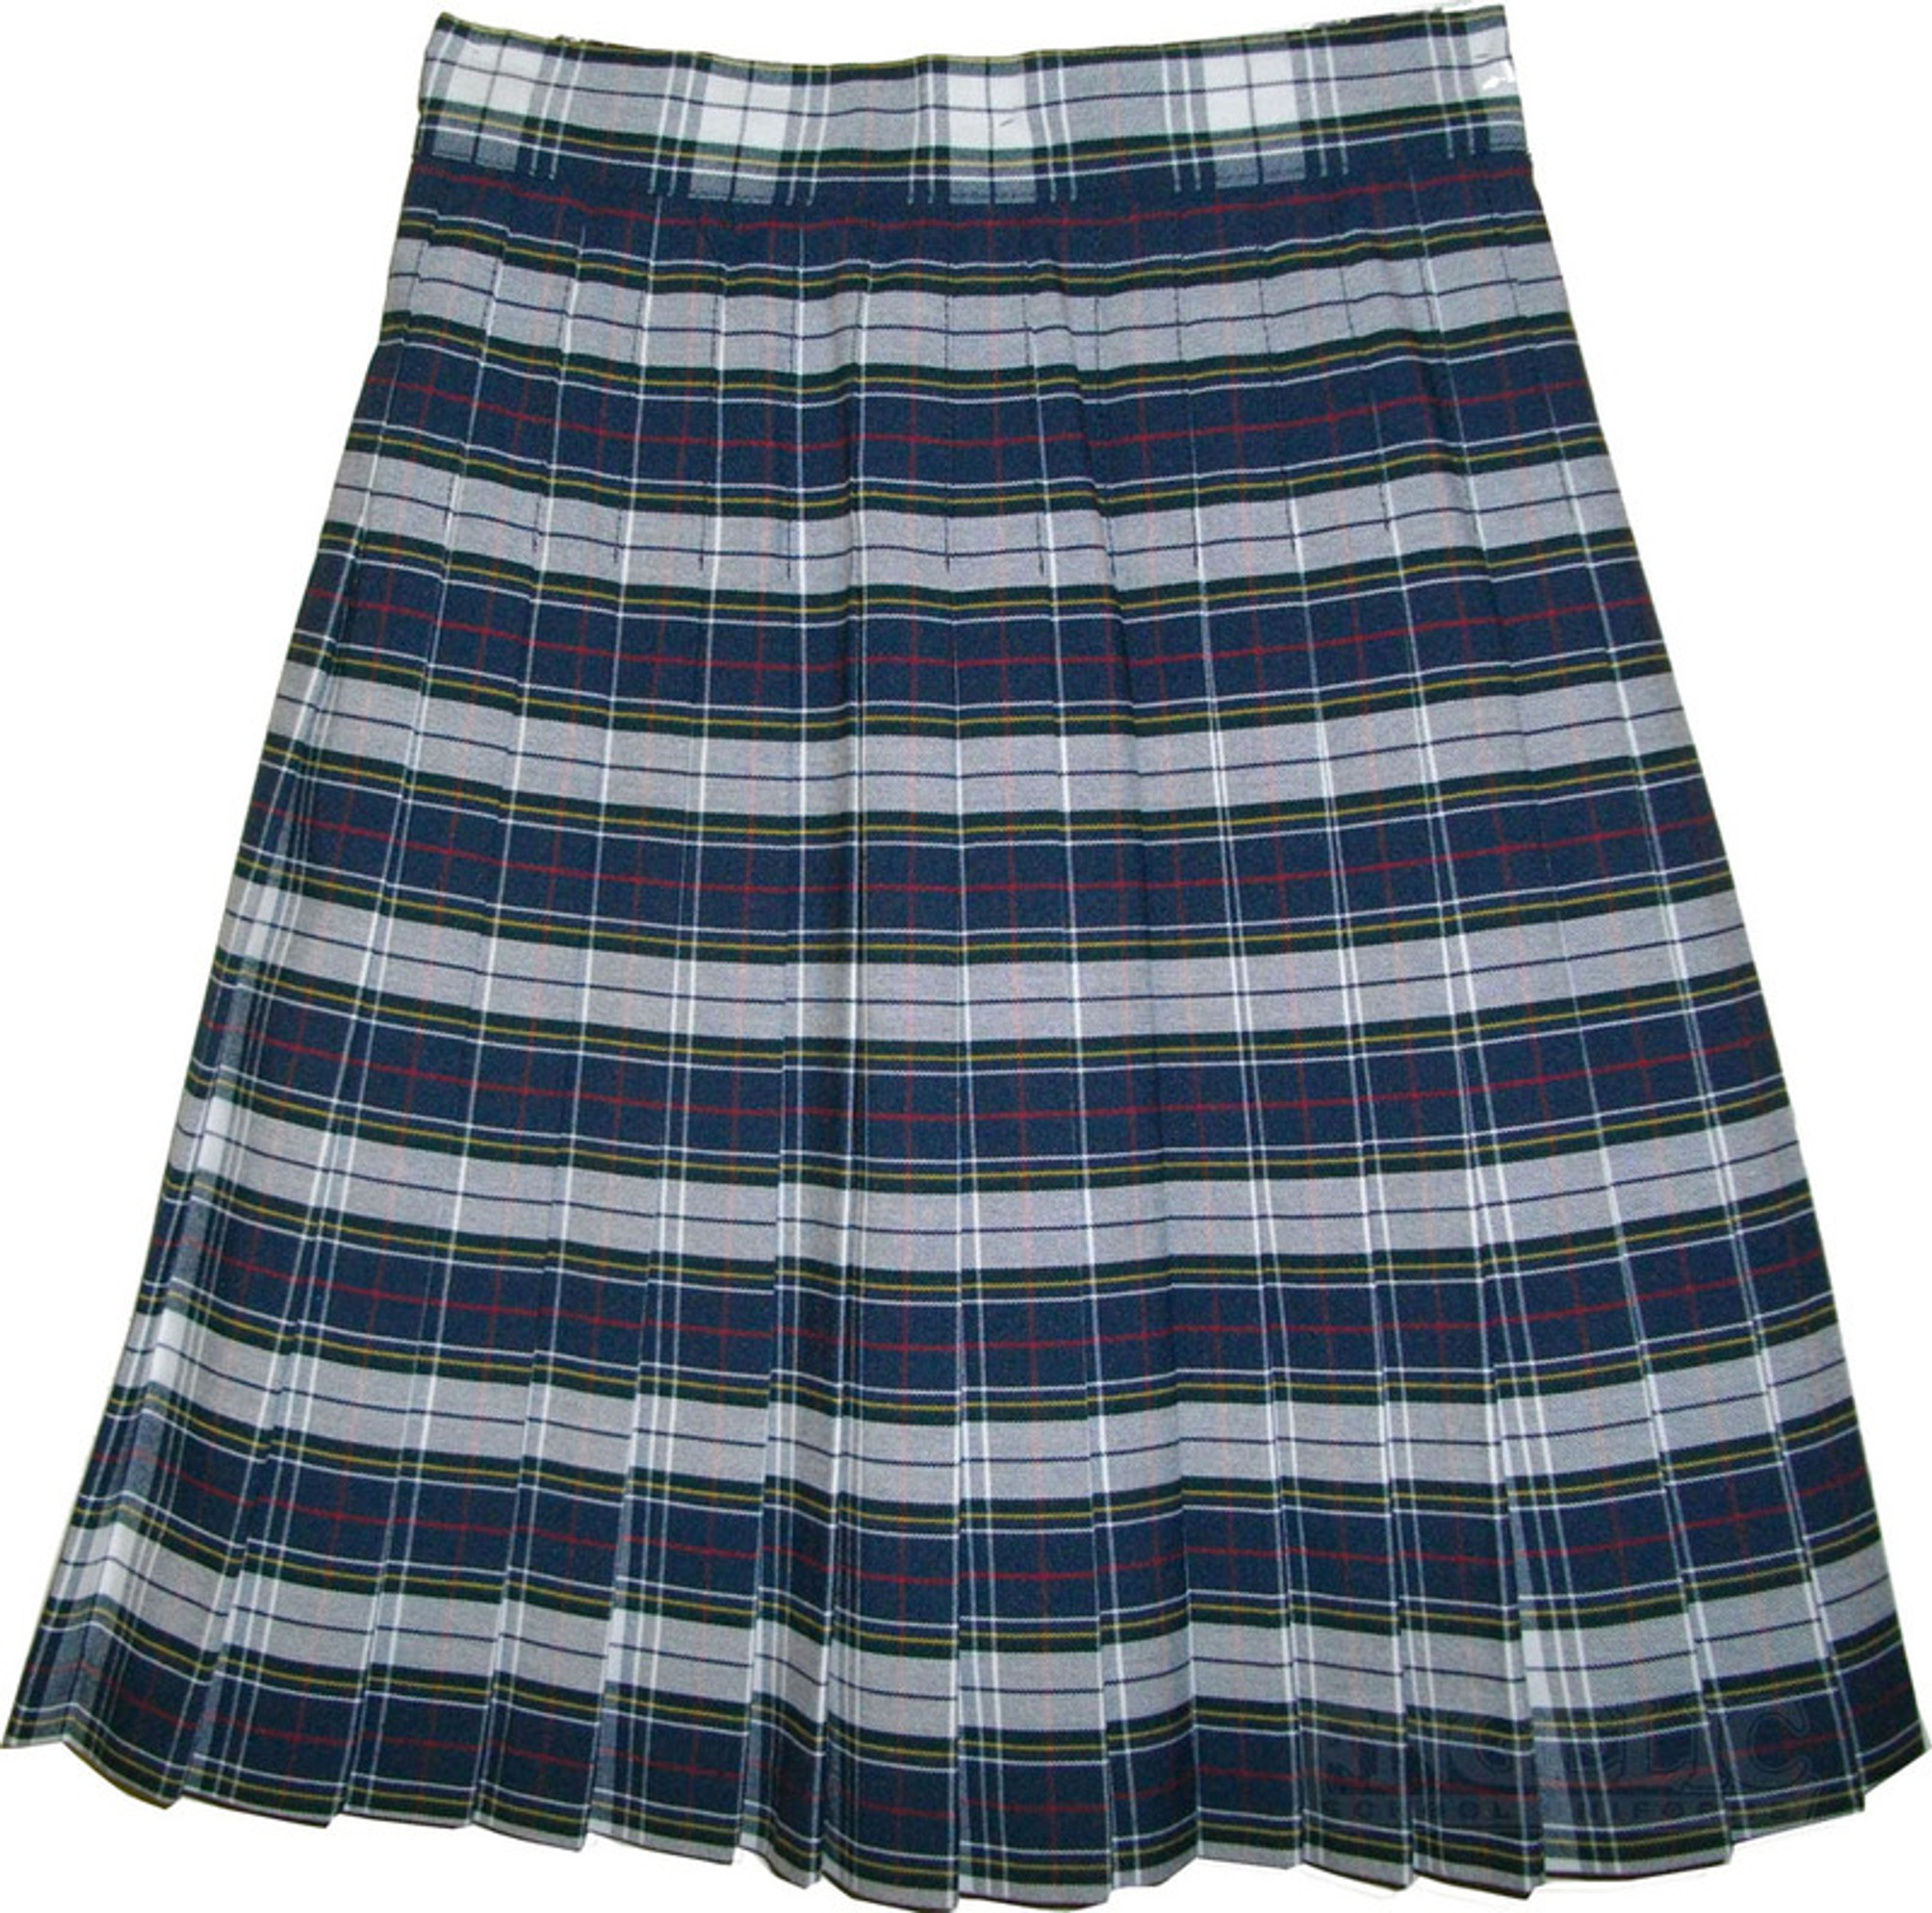 School uniform skirts